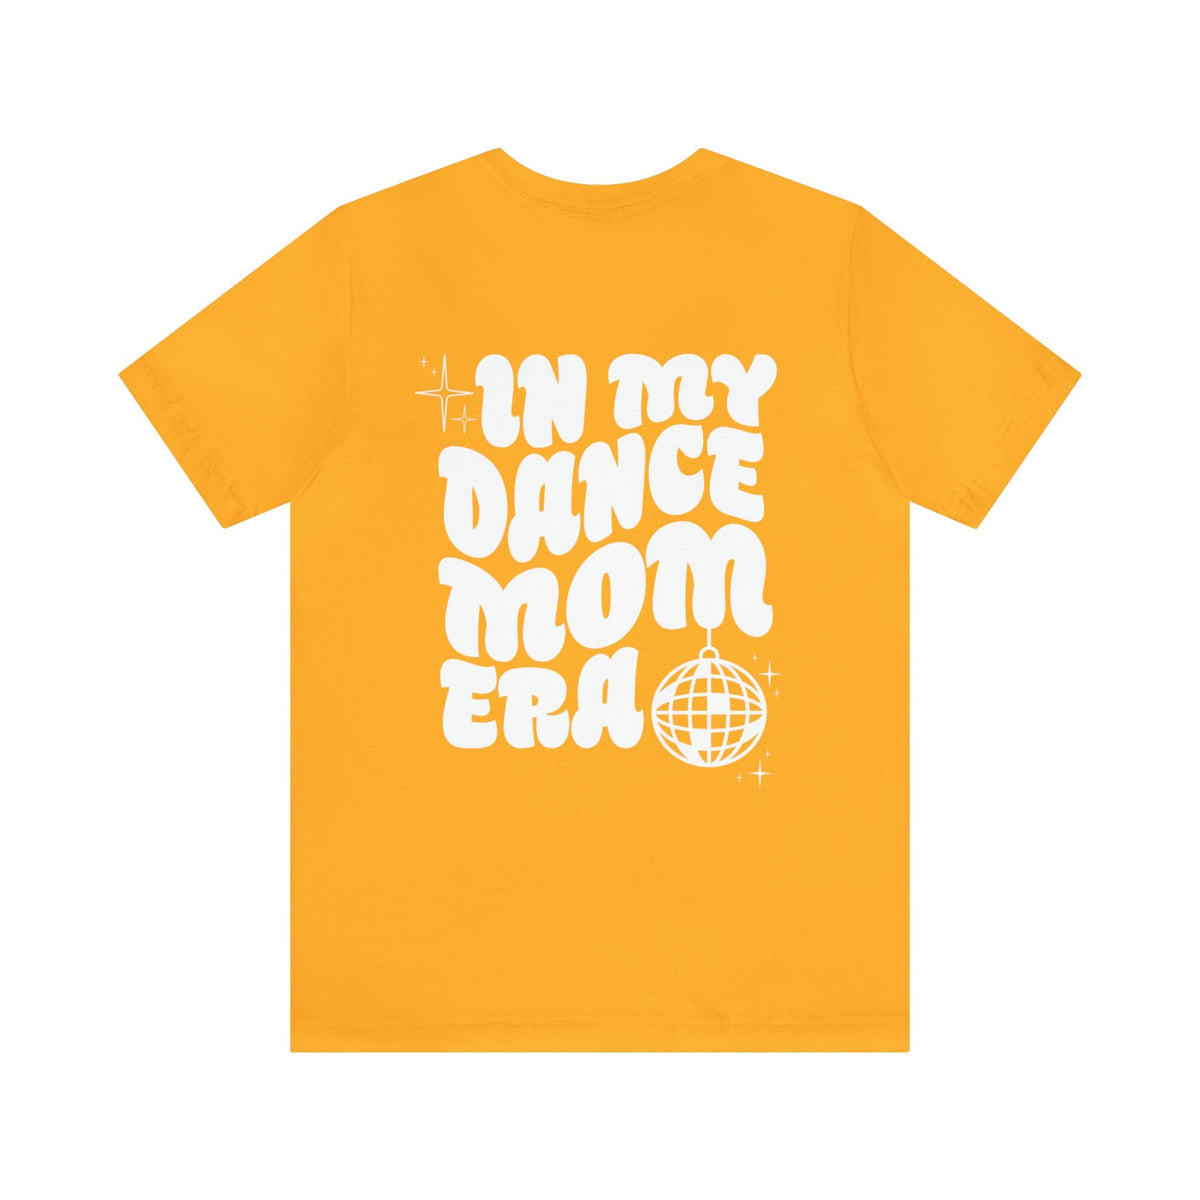 Dance Mom Shirt In my Dance Mom Era Graphic Tee T-Shirt TheFringeCultureCollective